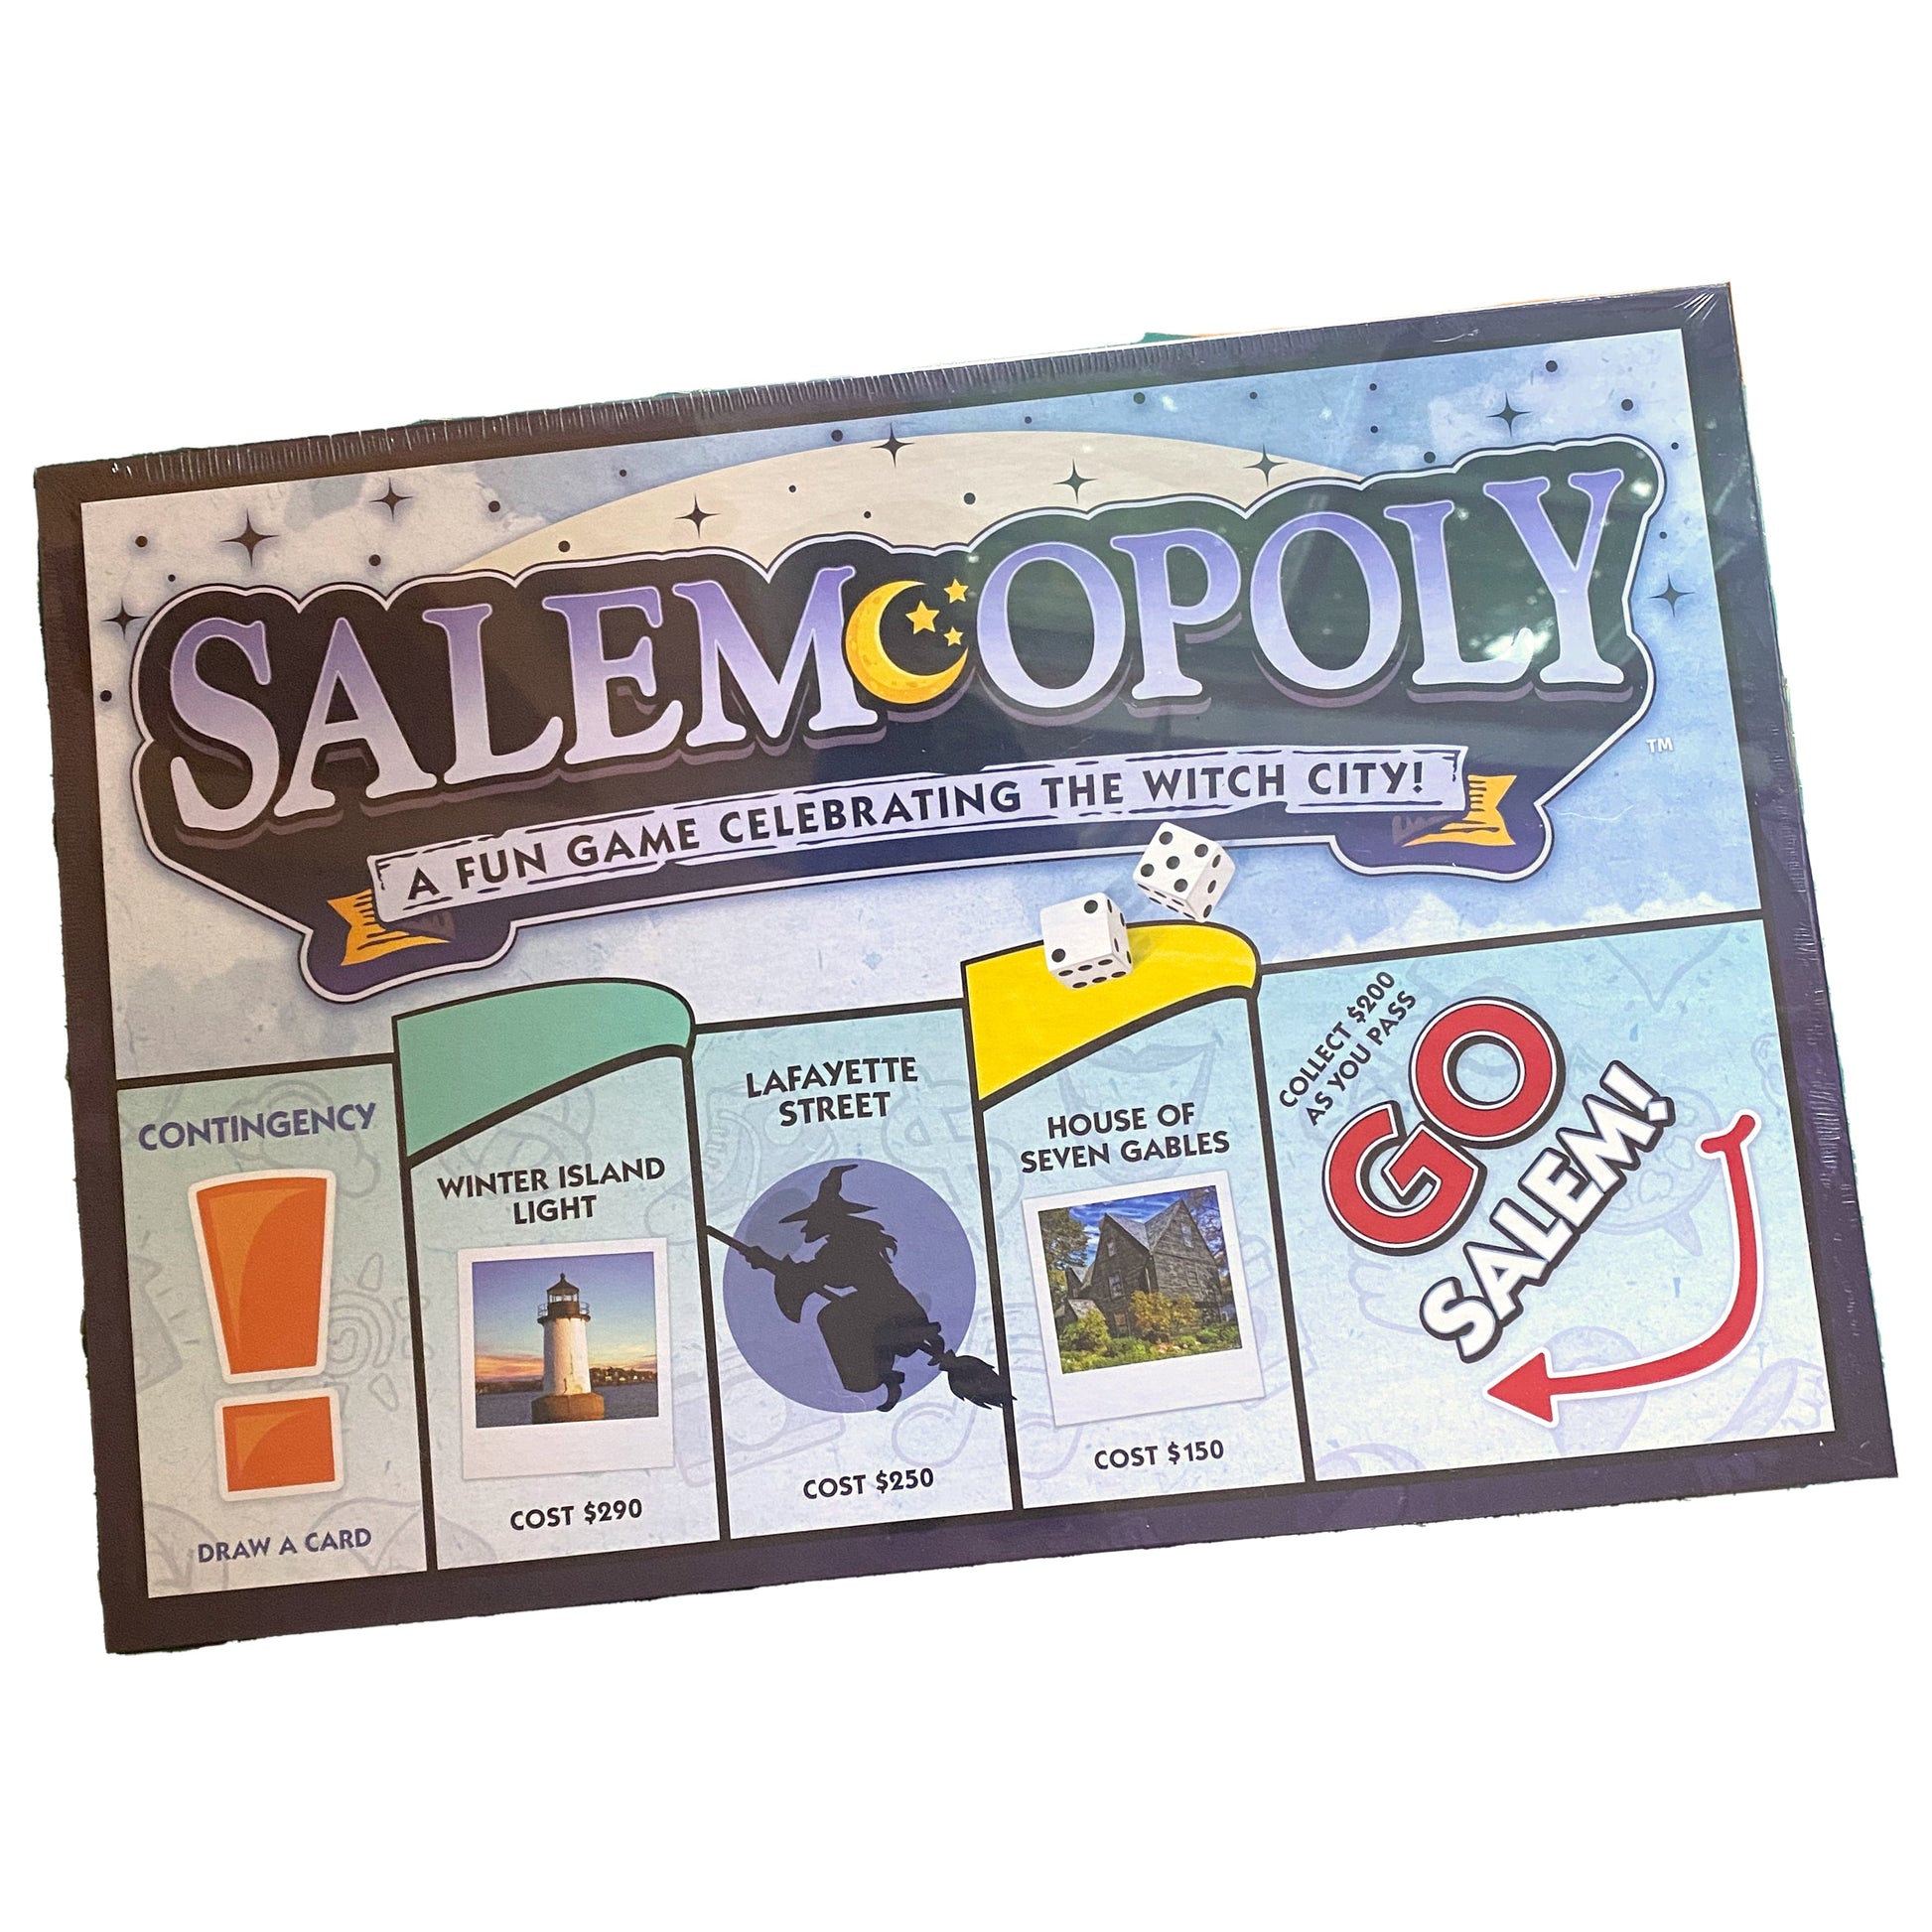 Salemopoly! - Keep Salem Odd